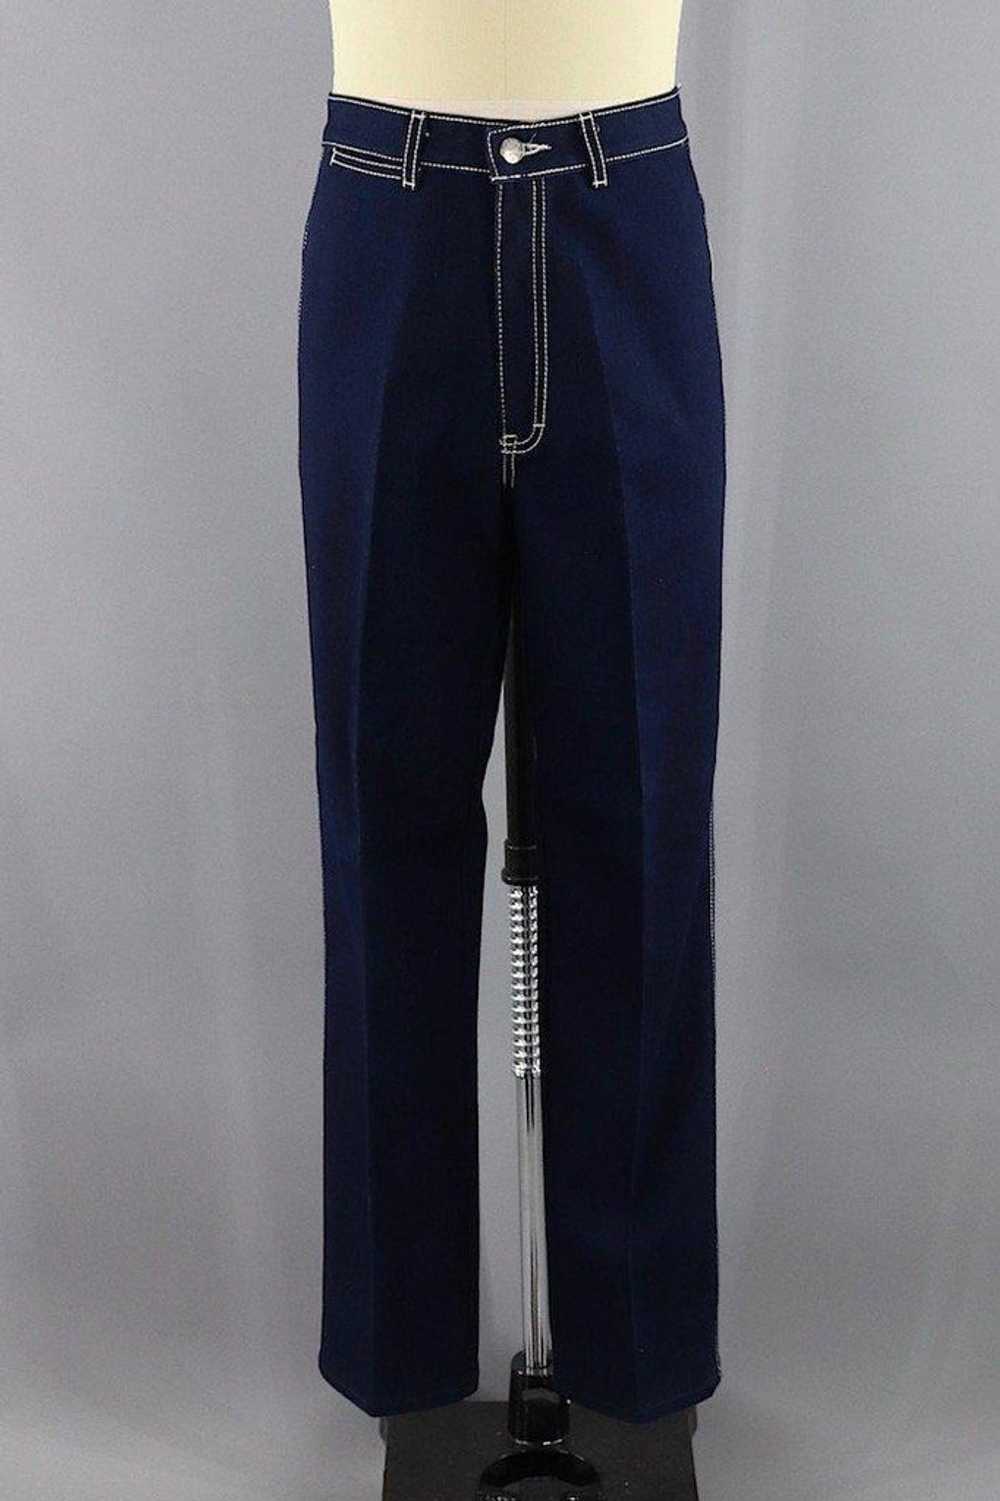 Vintage 1980s Gitano Jeans with Original Tags - image 1